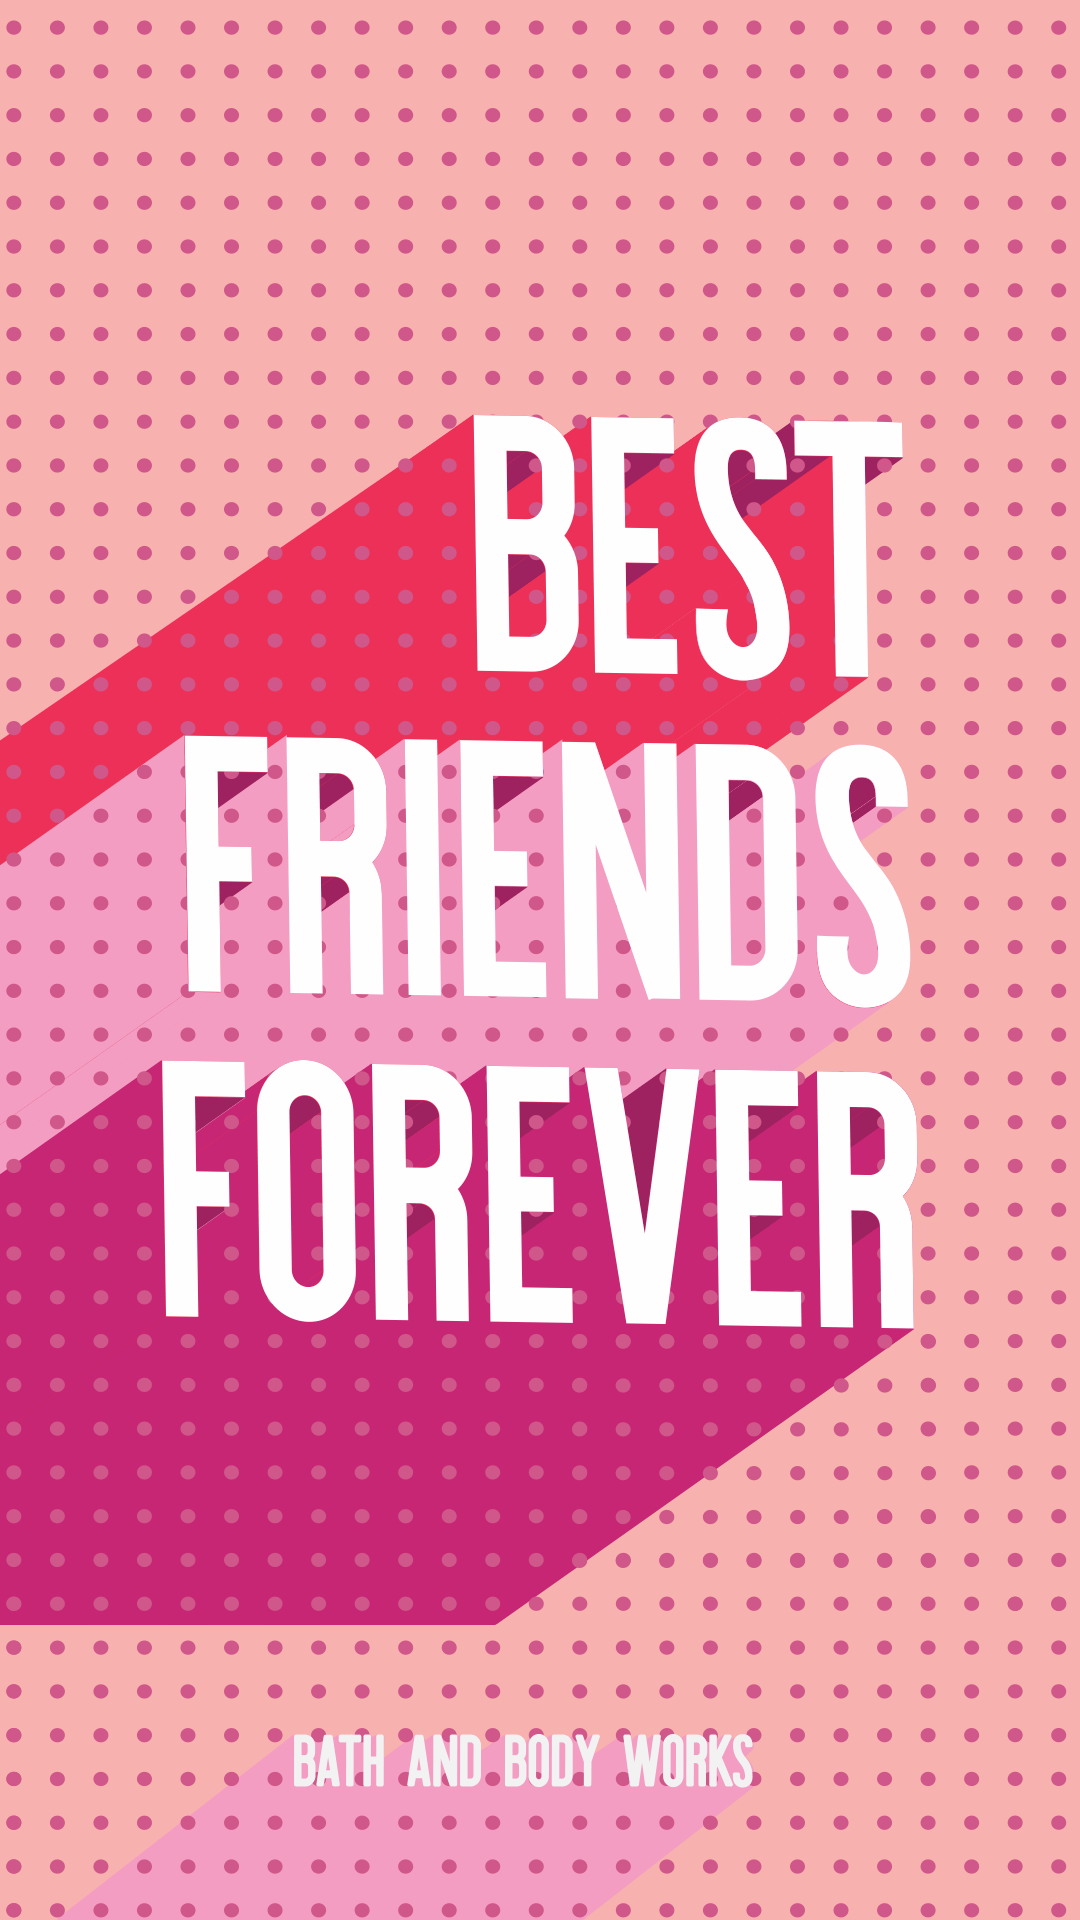 Best Friends Forever iPhone Wallpaper. Best friend wallpaper, Friends wallpaper, Best friends forever